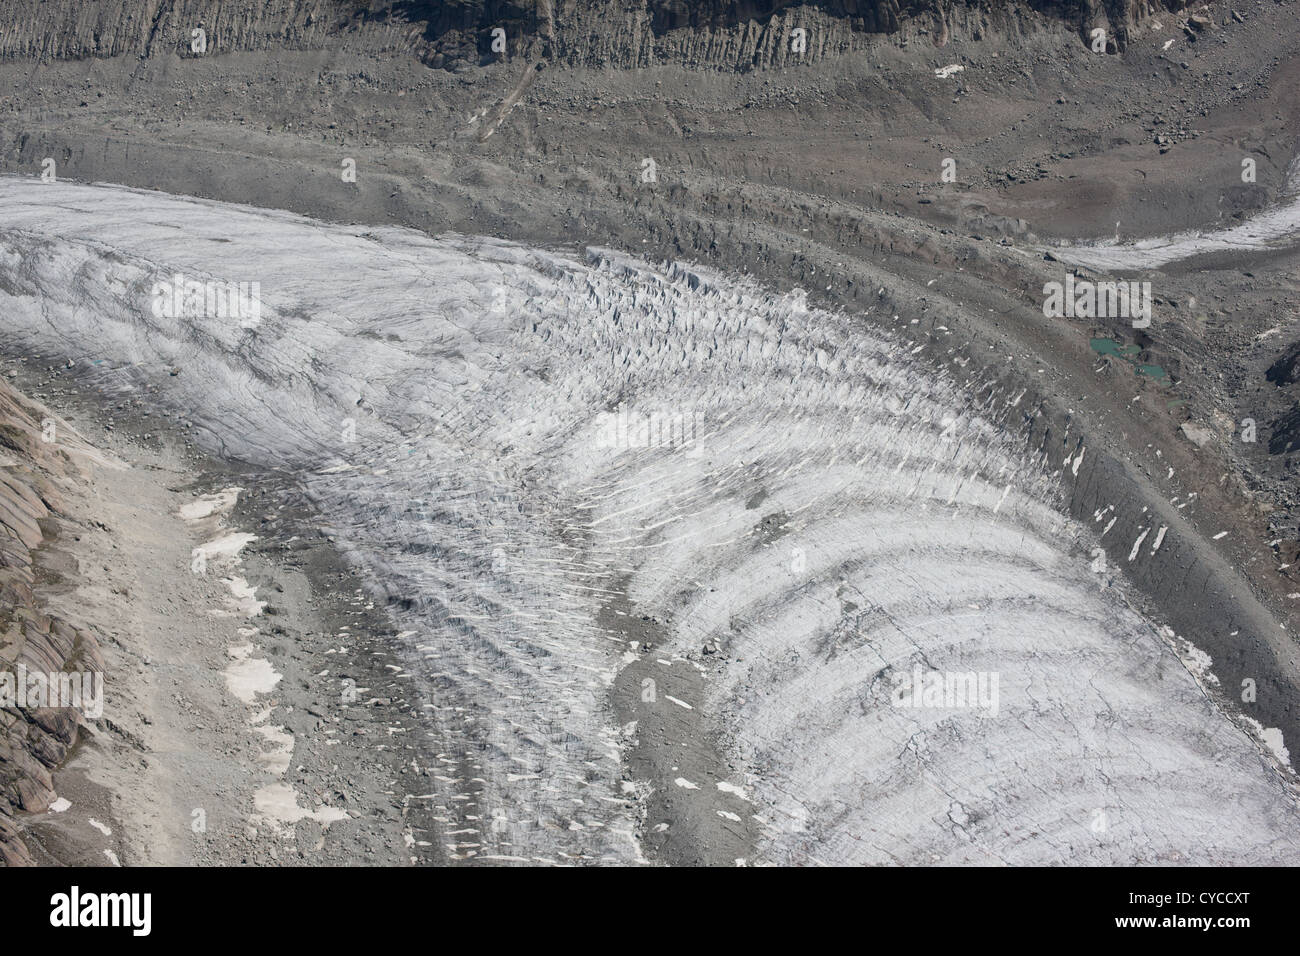 VISTA AÉREA. Forbes bandas u odas en un glaciar. Una banda equivale a un año. Chamonix Mont-Blanc, Mer de Glace, Alta Saboya, Francia. Foto de stock